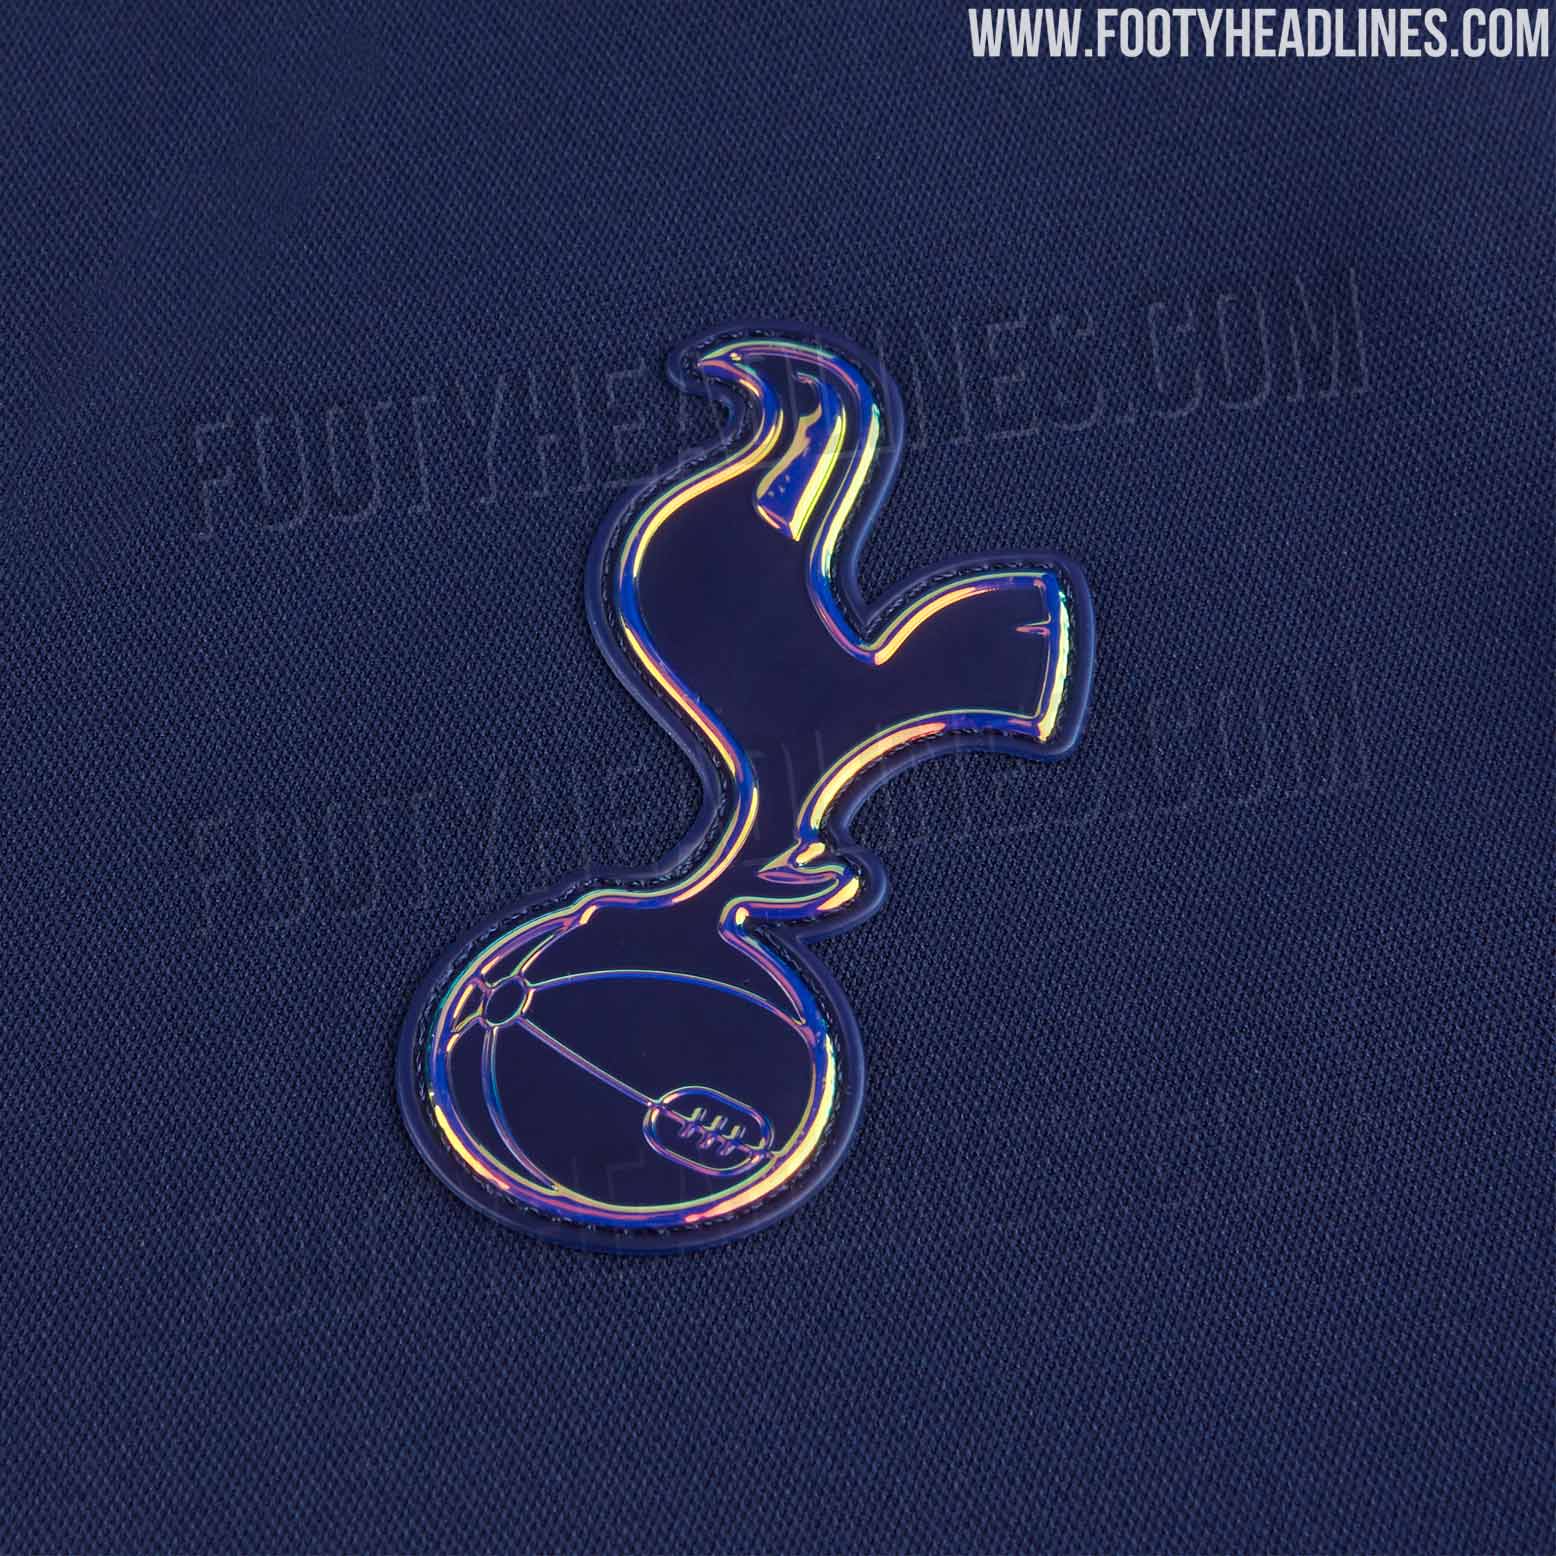 Tottenham Hotspur 19-20 Away Kit to Feature Iridescent Logos - Footy ...